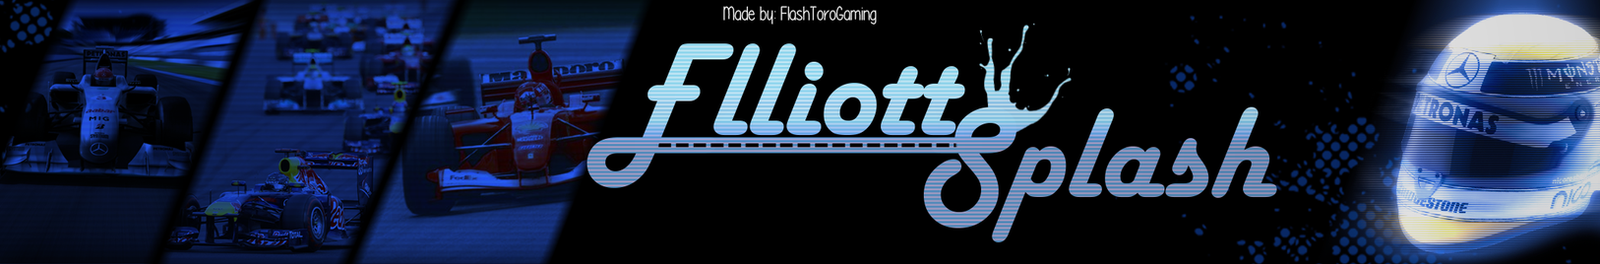 elliotsplash_banner_by_flashtoro-d8xqss6.png